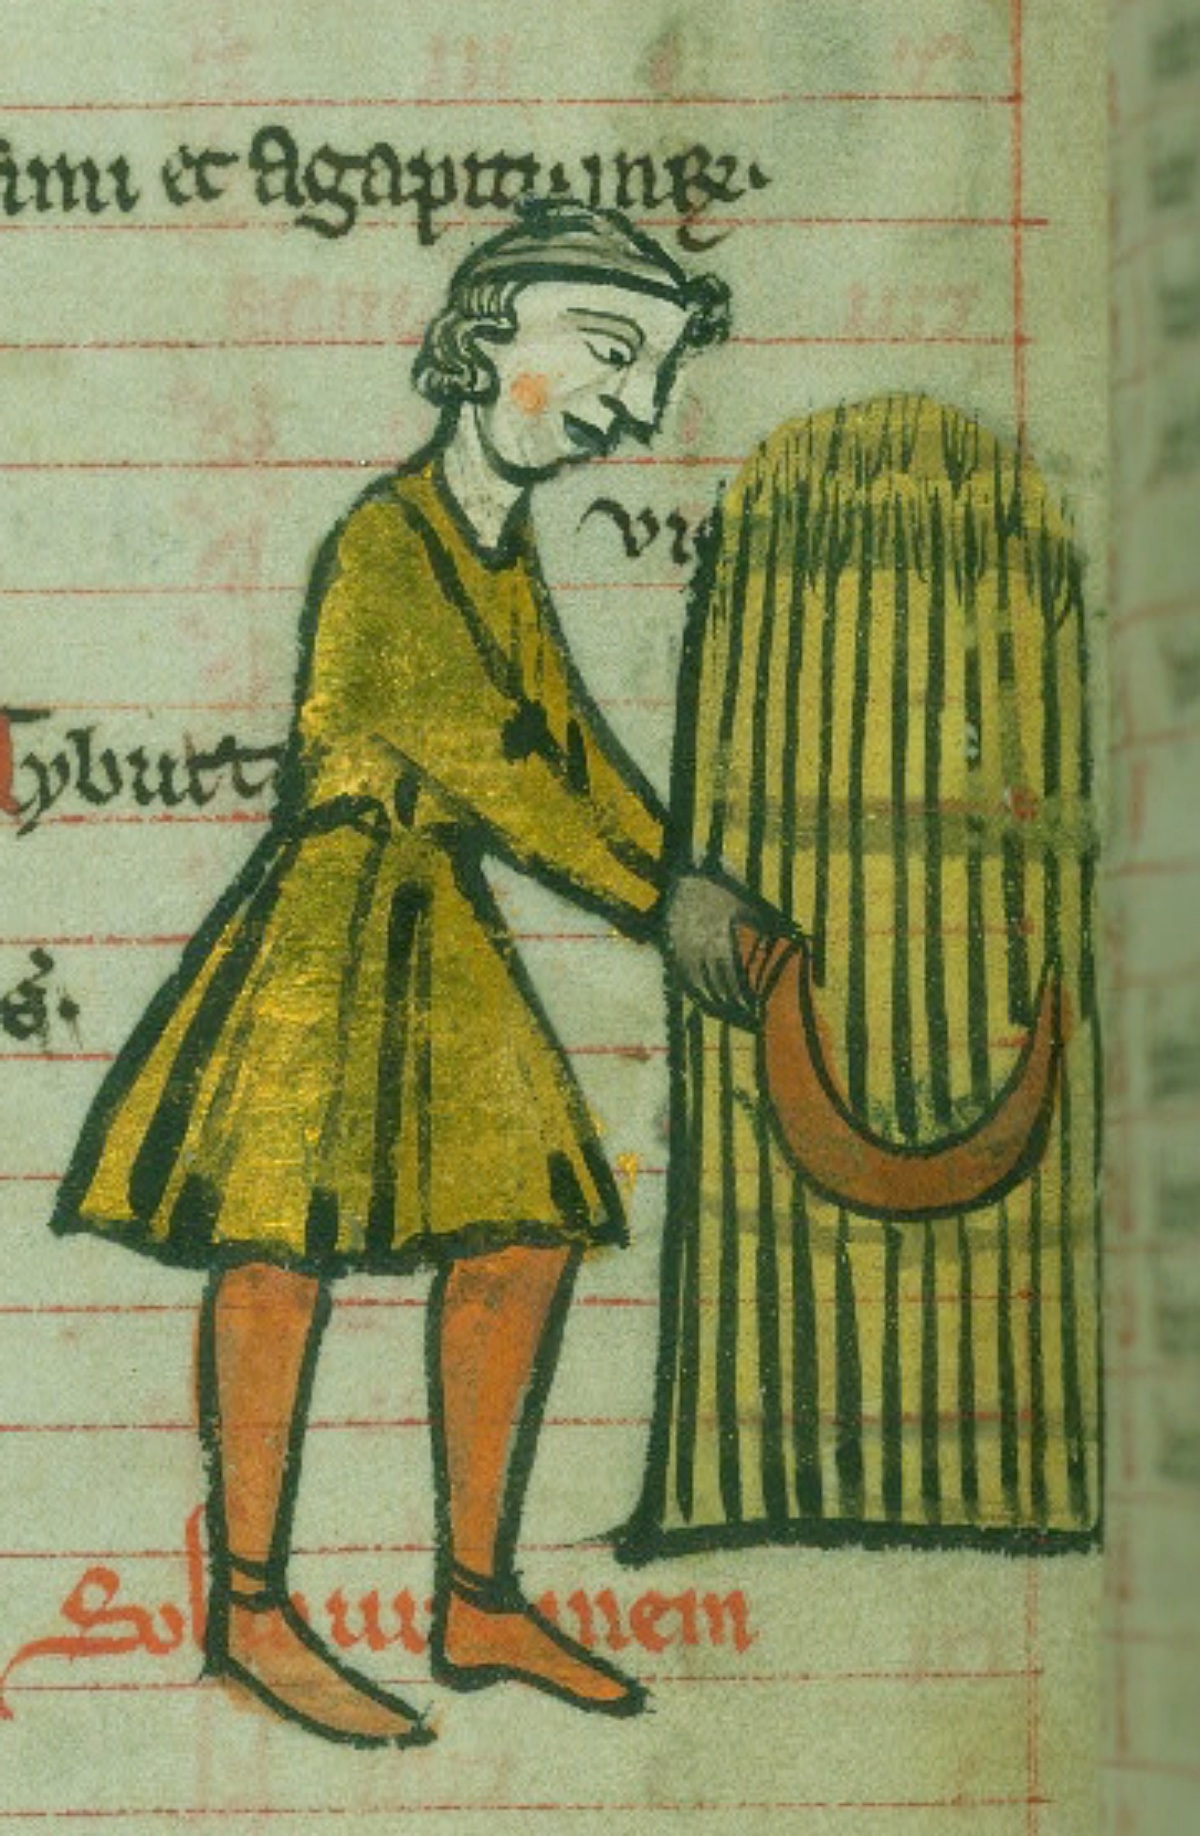 harvesting wheat depicted in medieval manuscript